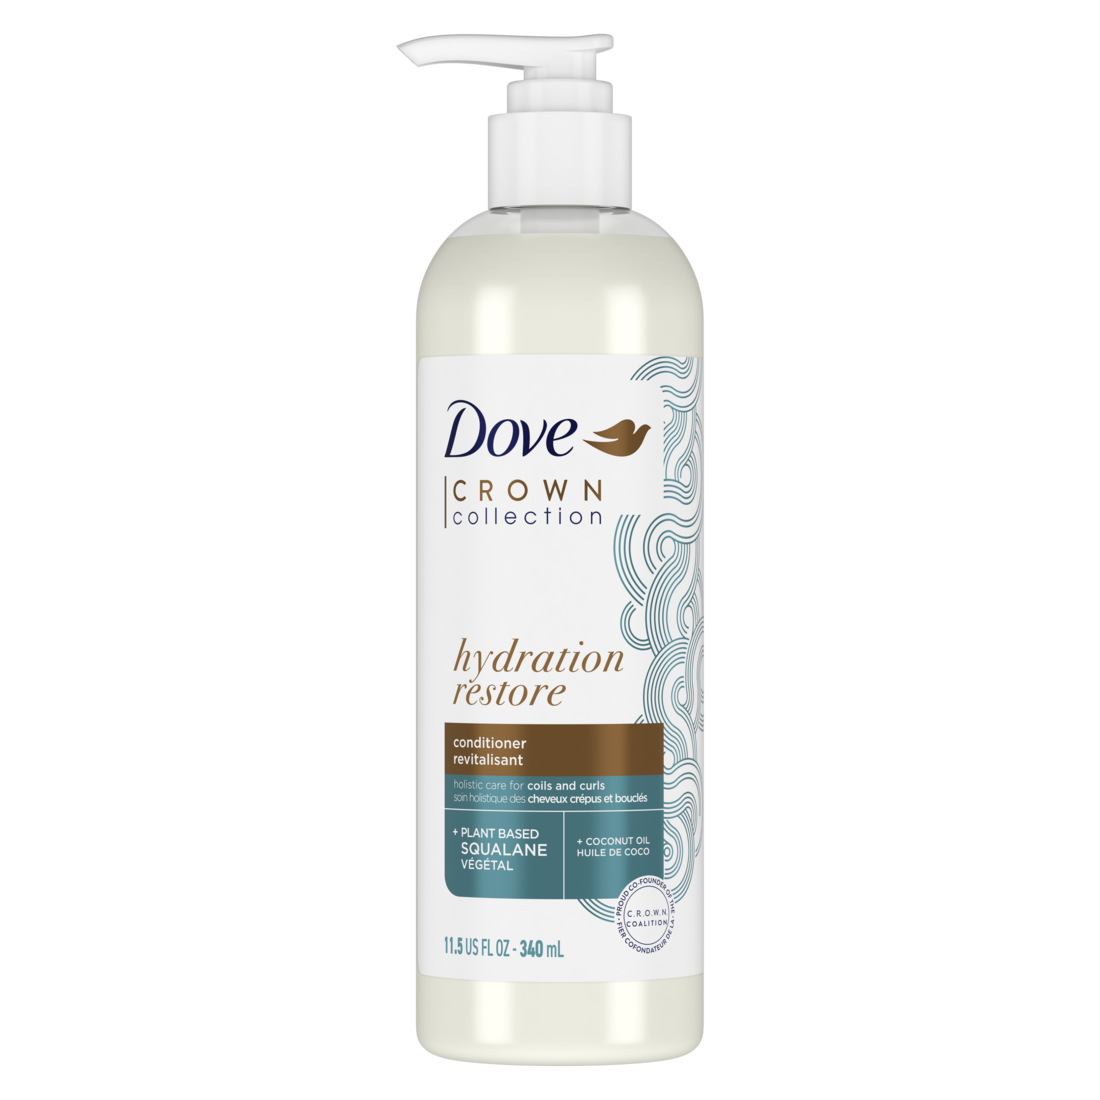 Dove CROWN Collection Hydration Restore Conditioner 340ml